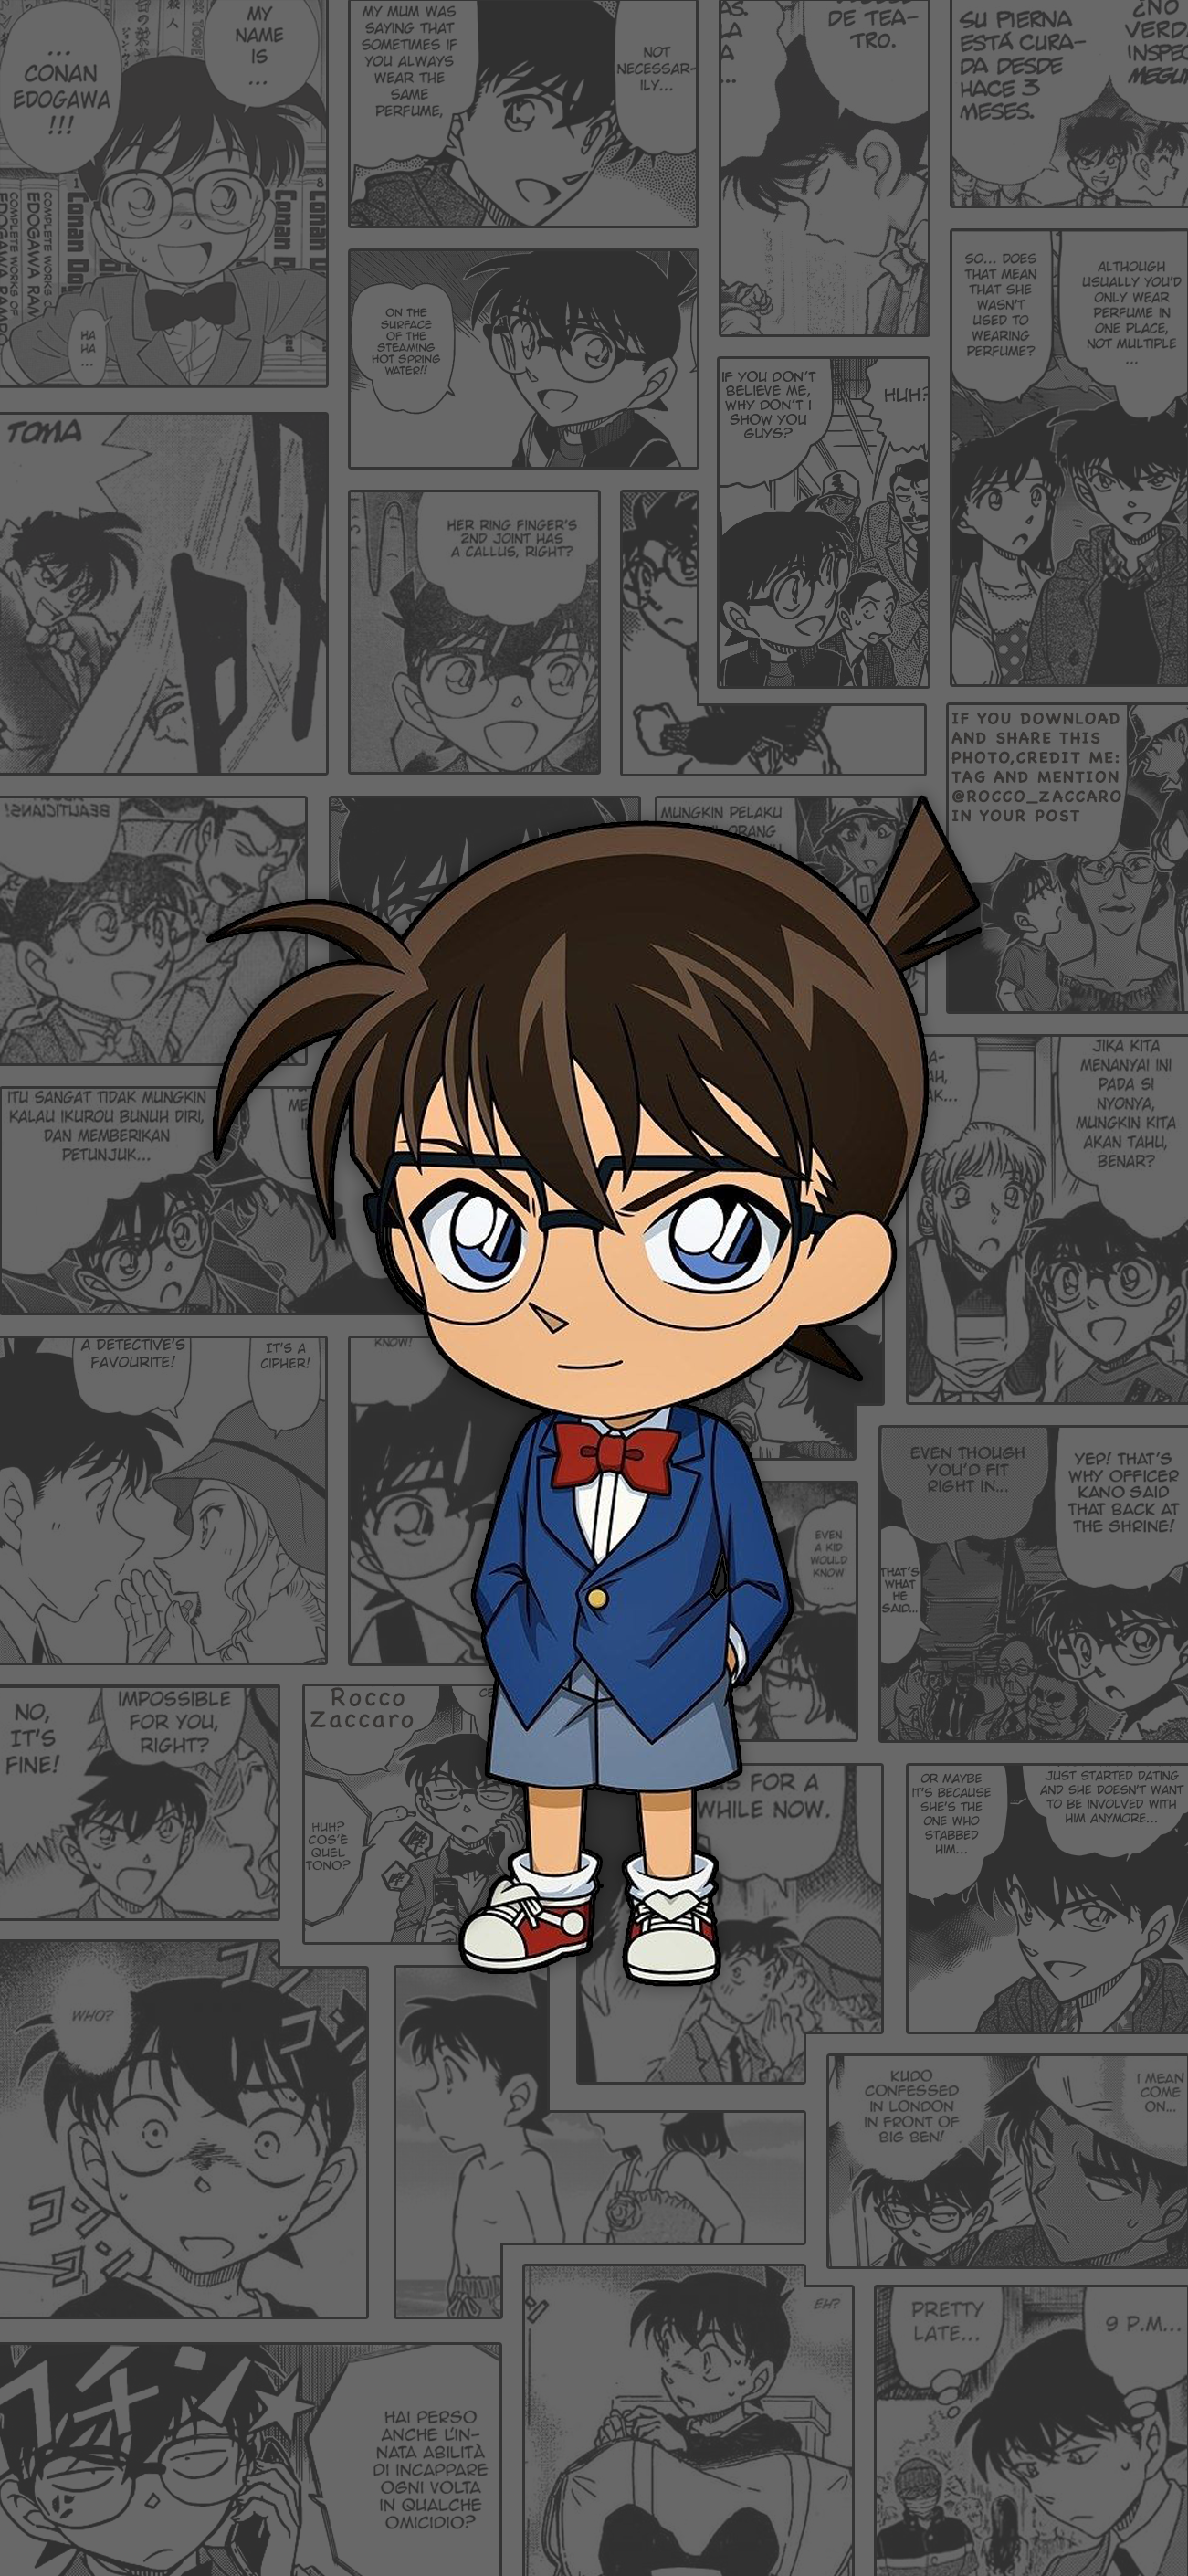 Detective Conan - Wallpapers Central